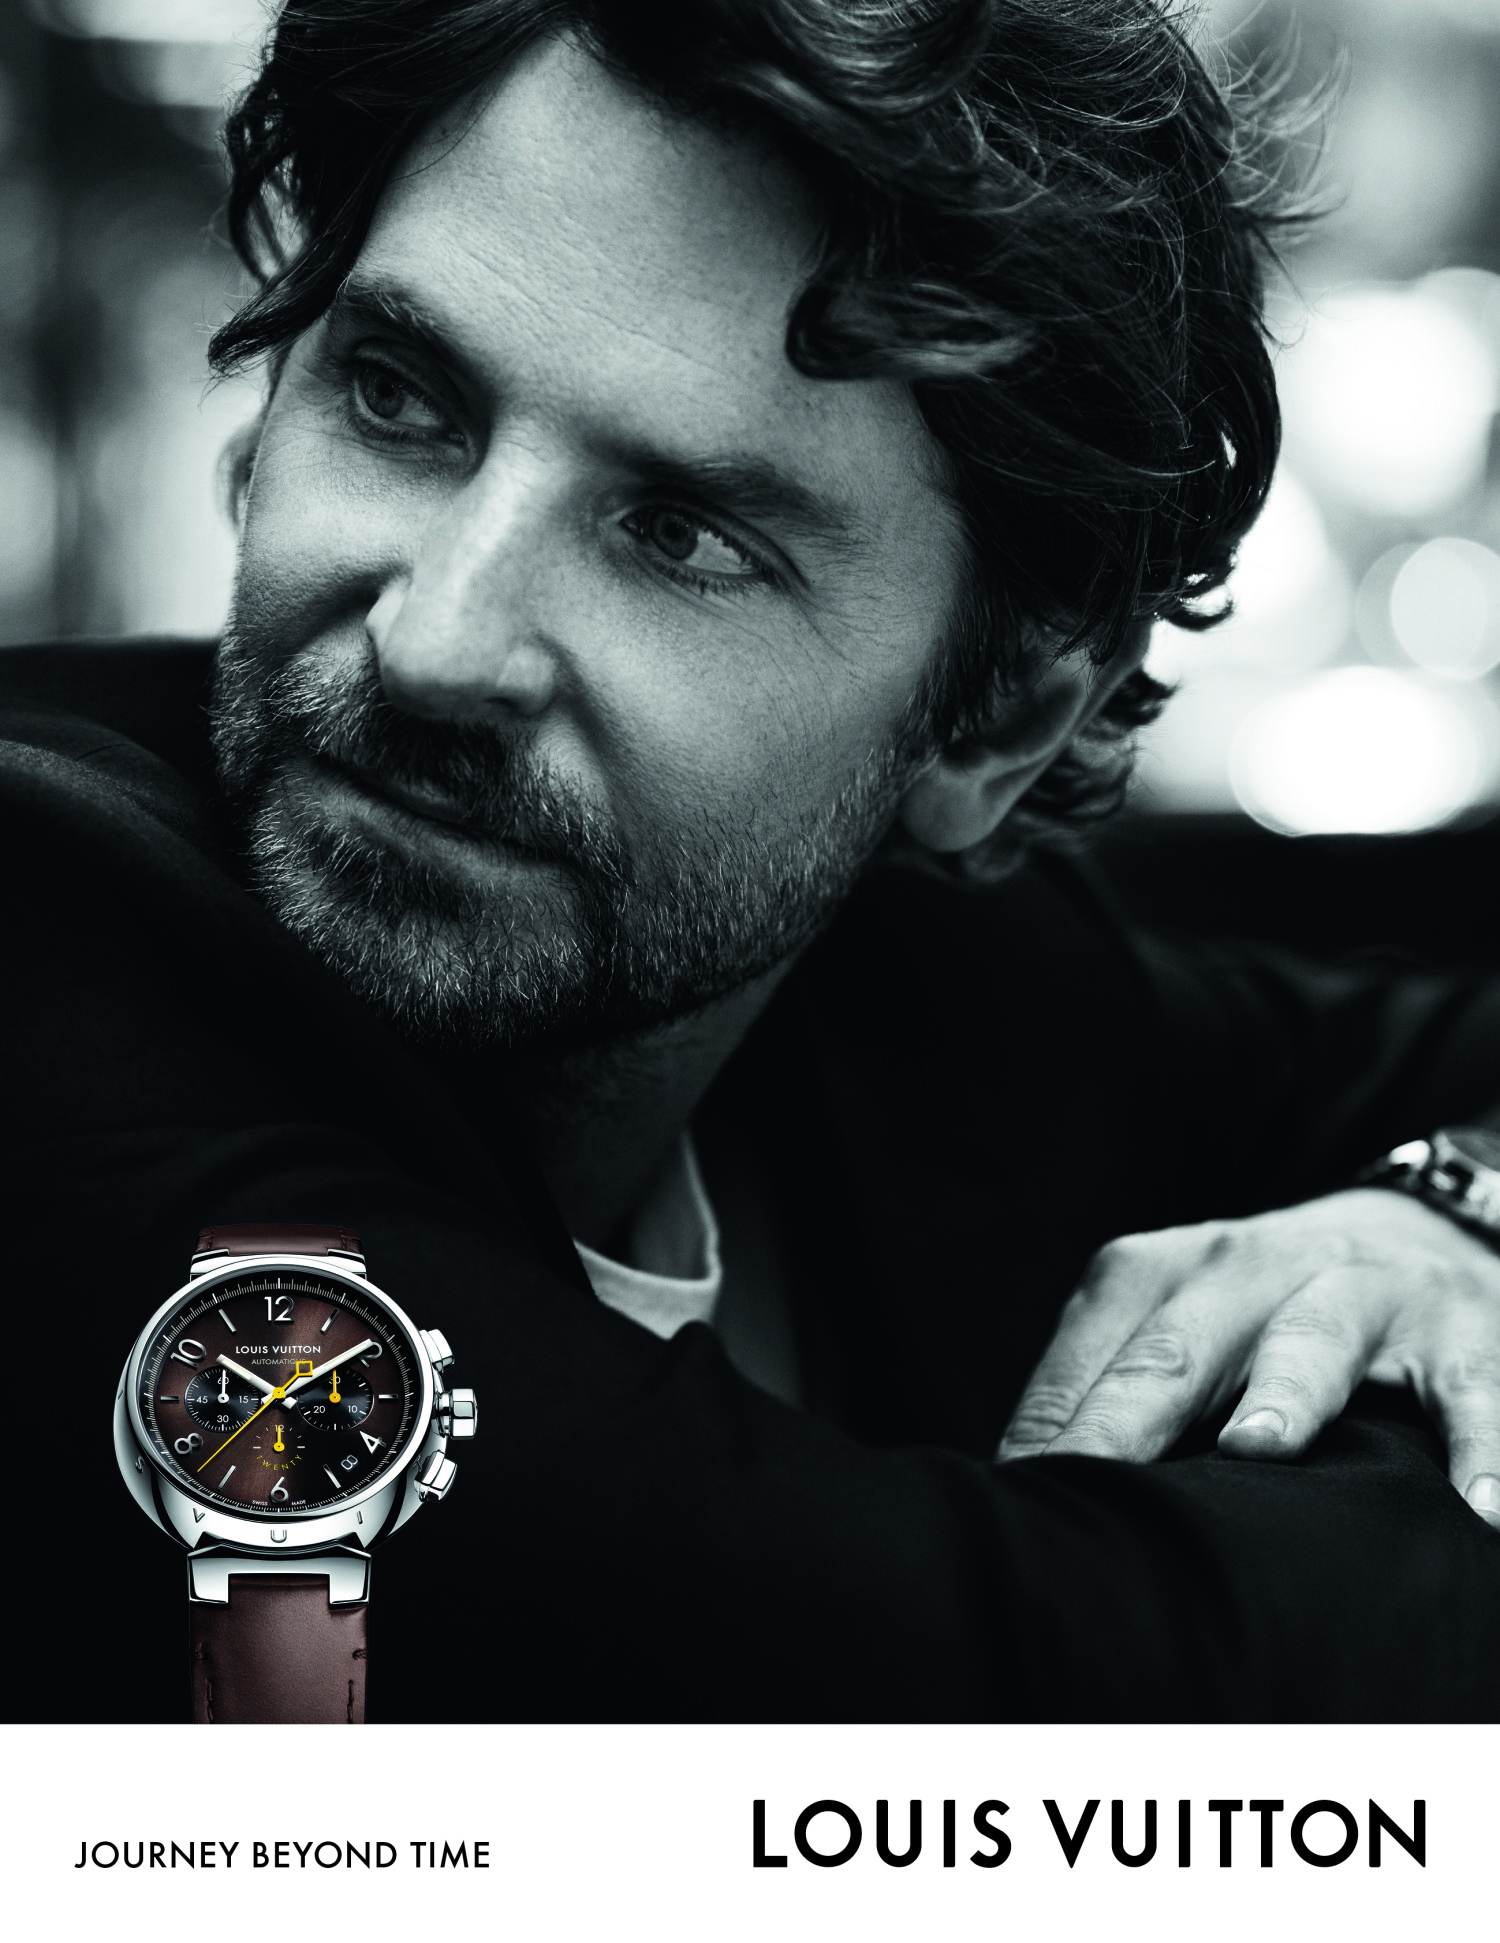 Actor Bradley Cooper joins Louis Vuitton as brand ambassador.